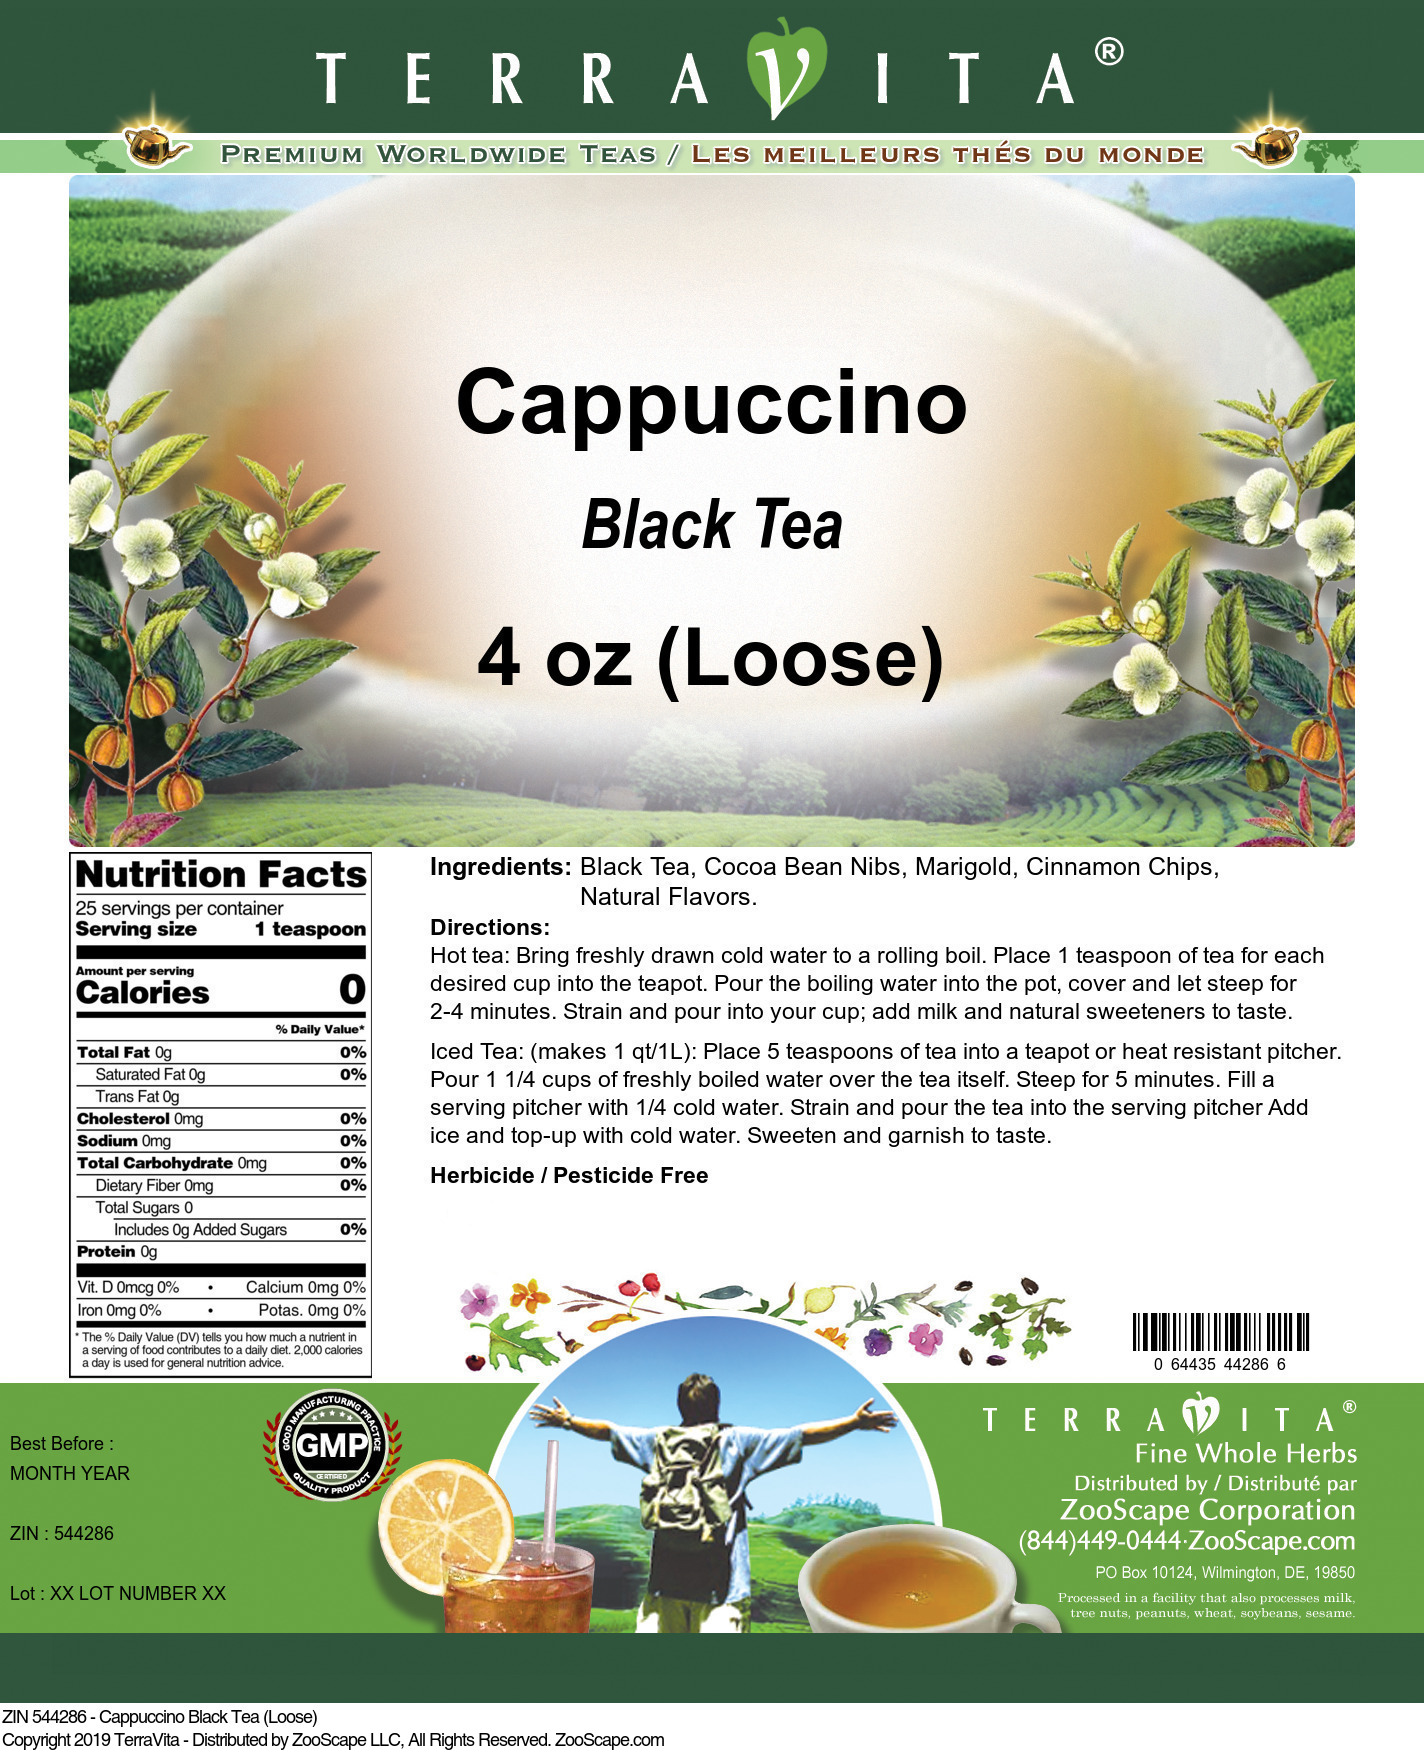 Cappuccino Black Tea (Loose) - Label